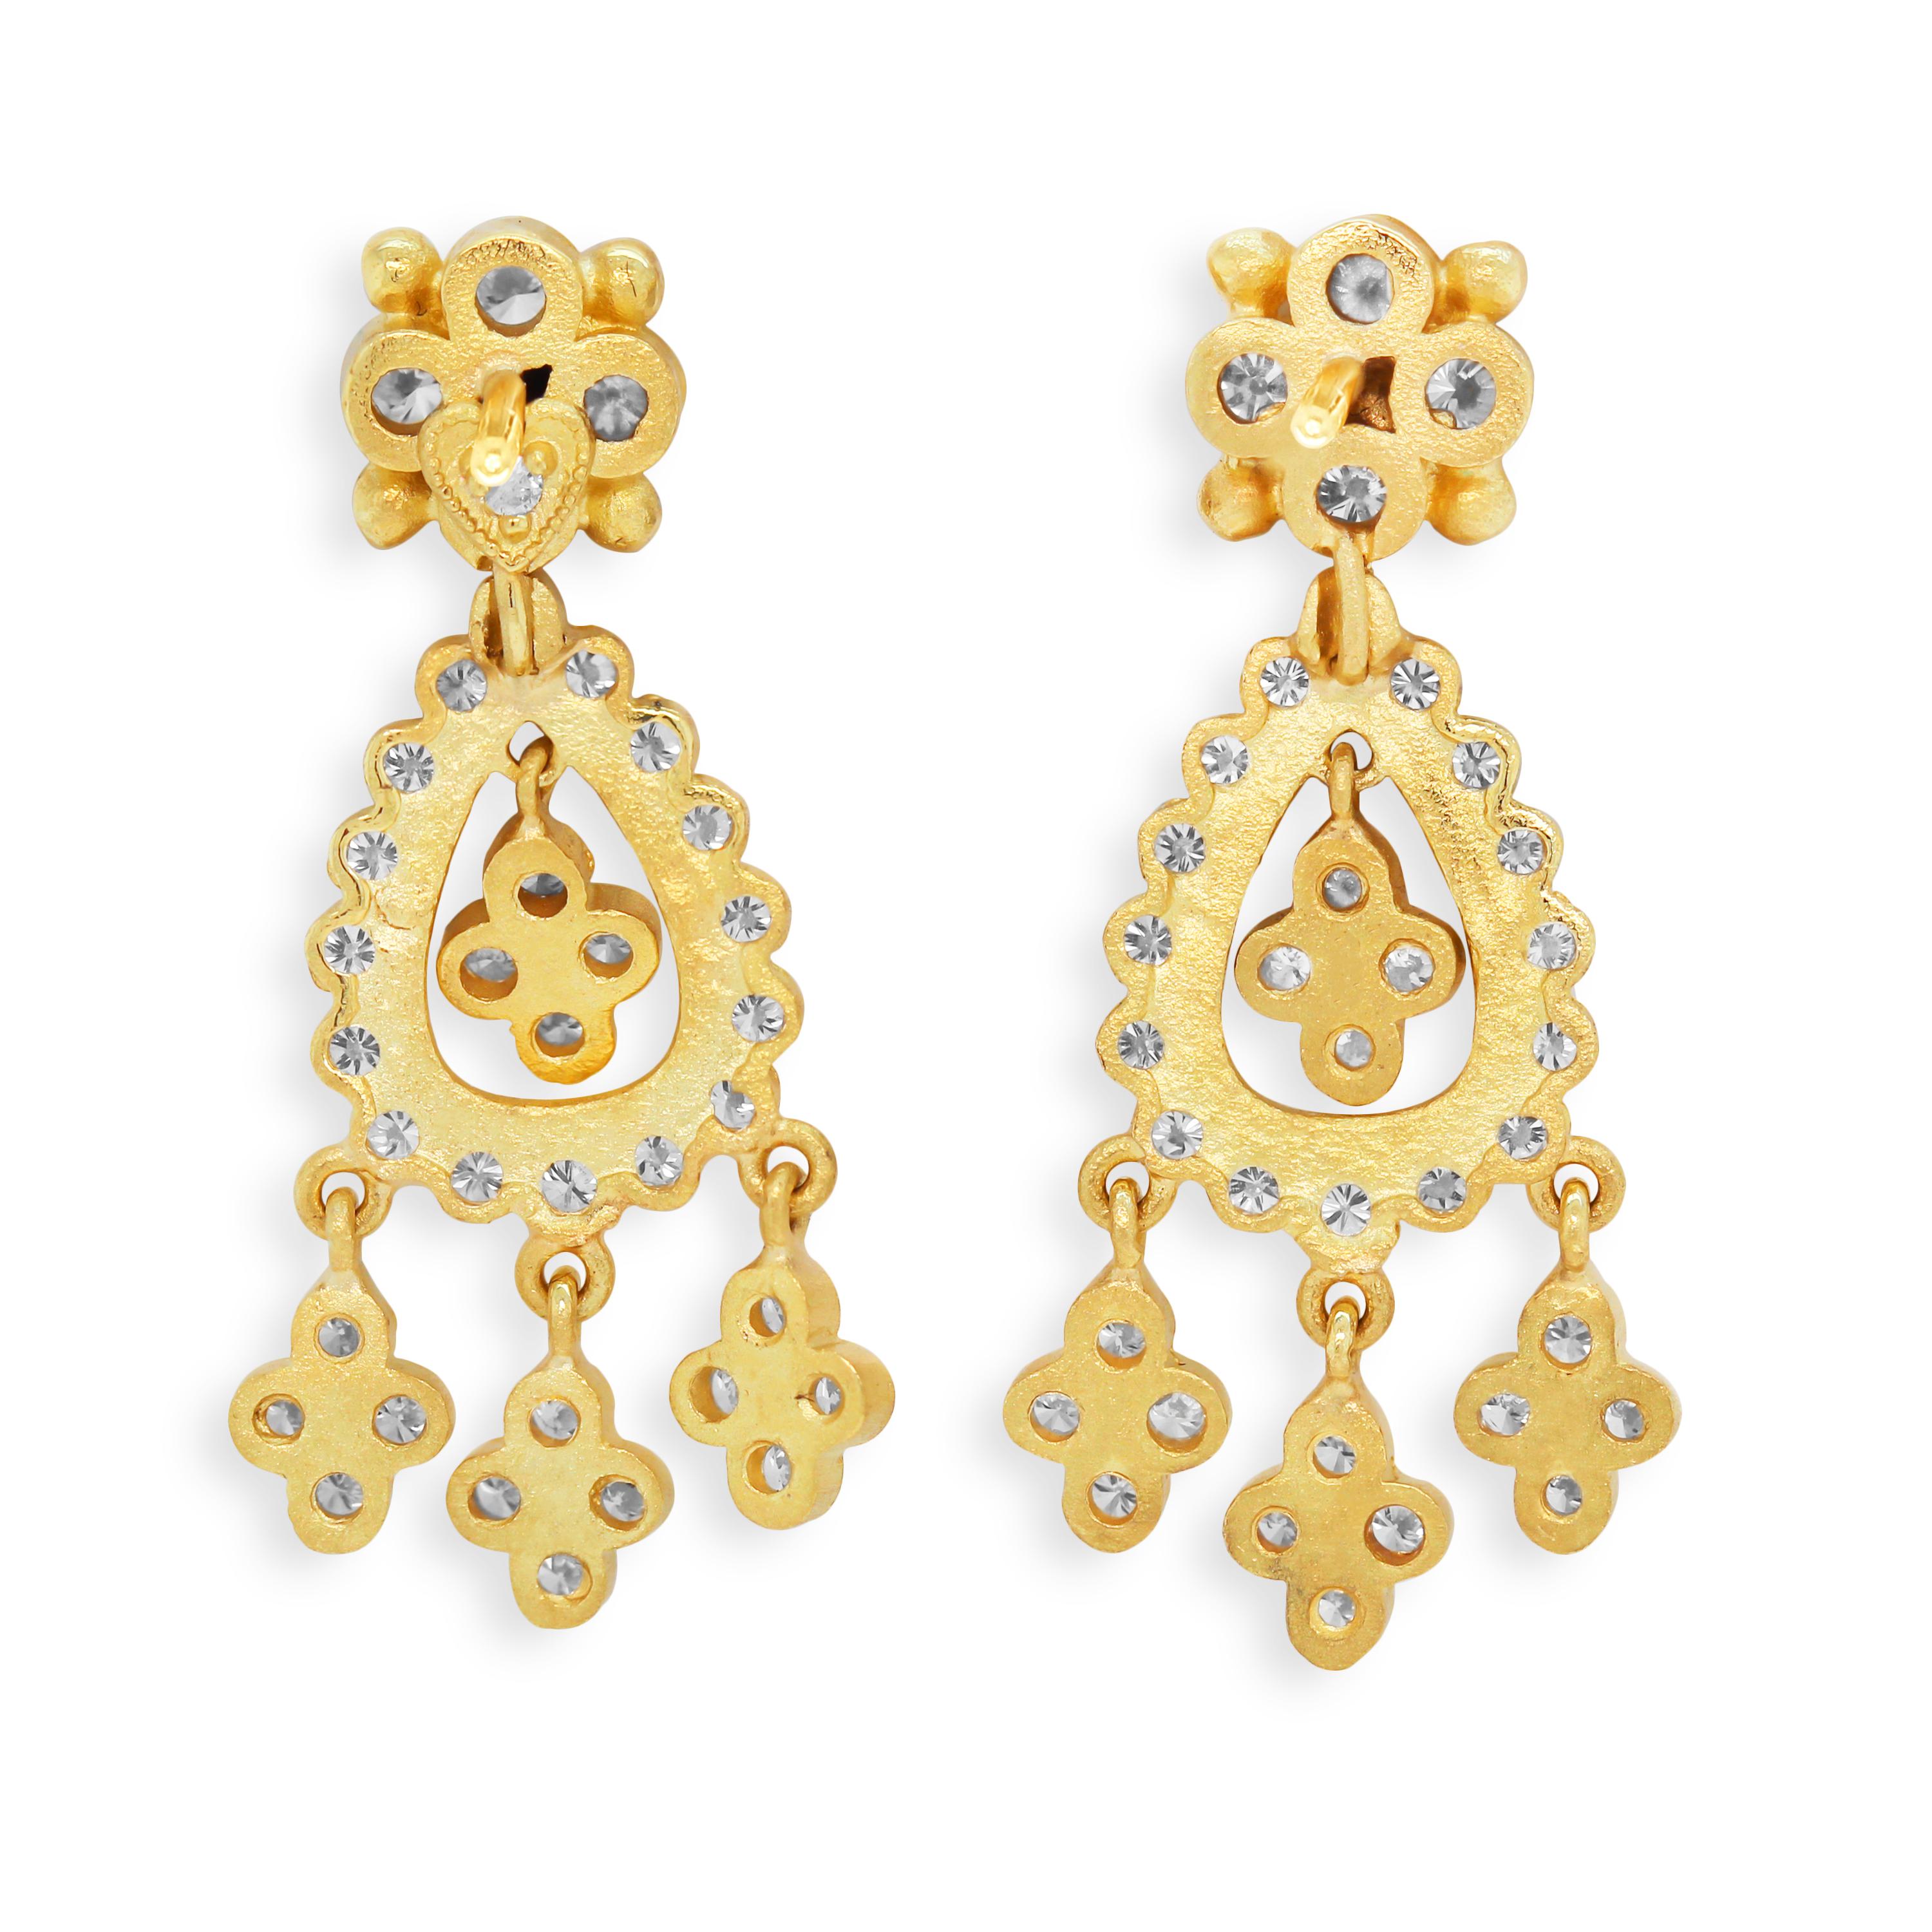 Stambolian 18K Yellow Gold and Diamond Dangle Earrings

From the Stambolian 